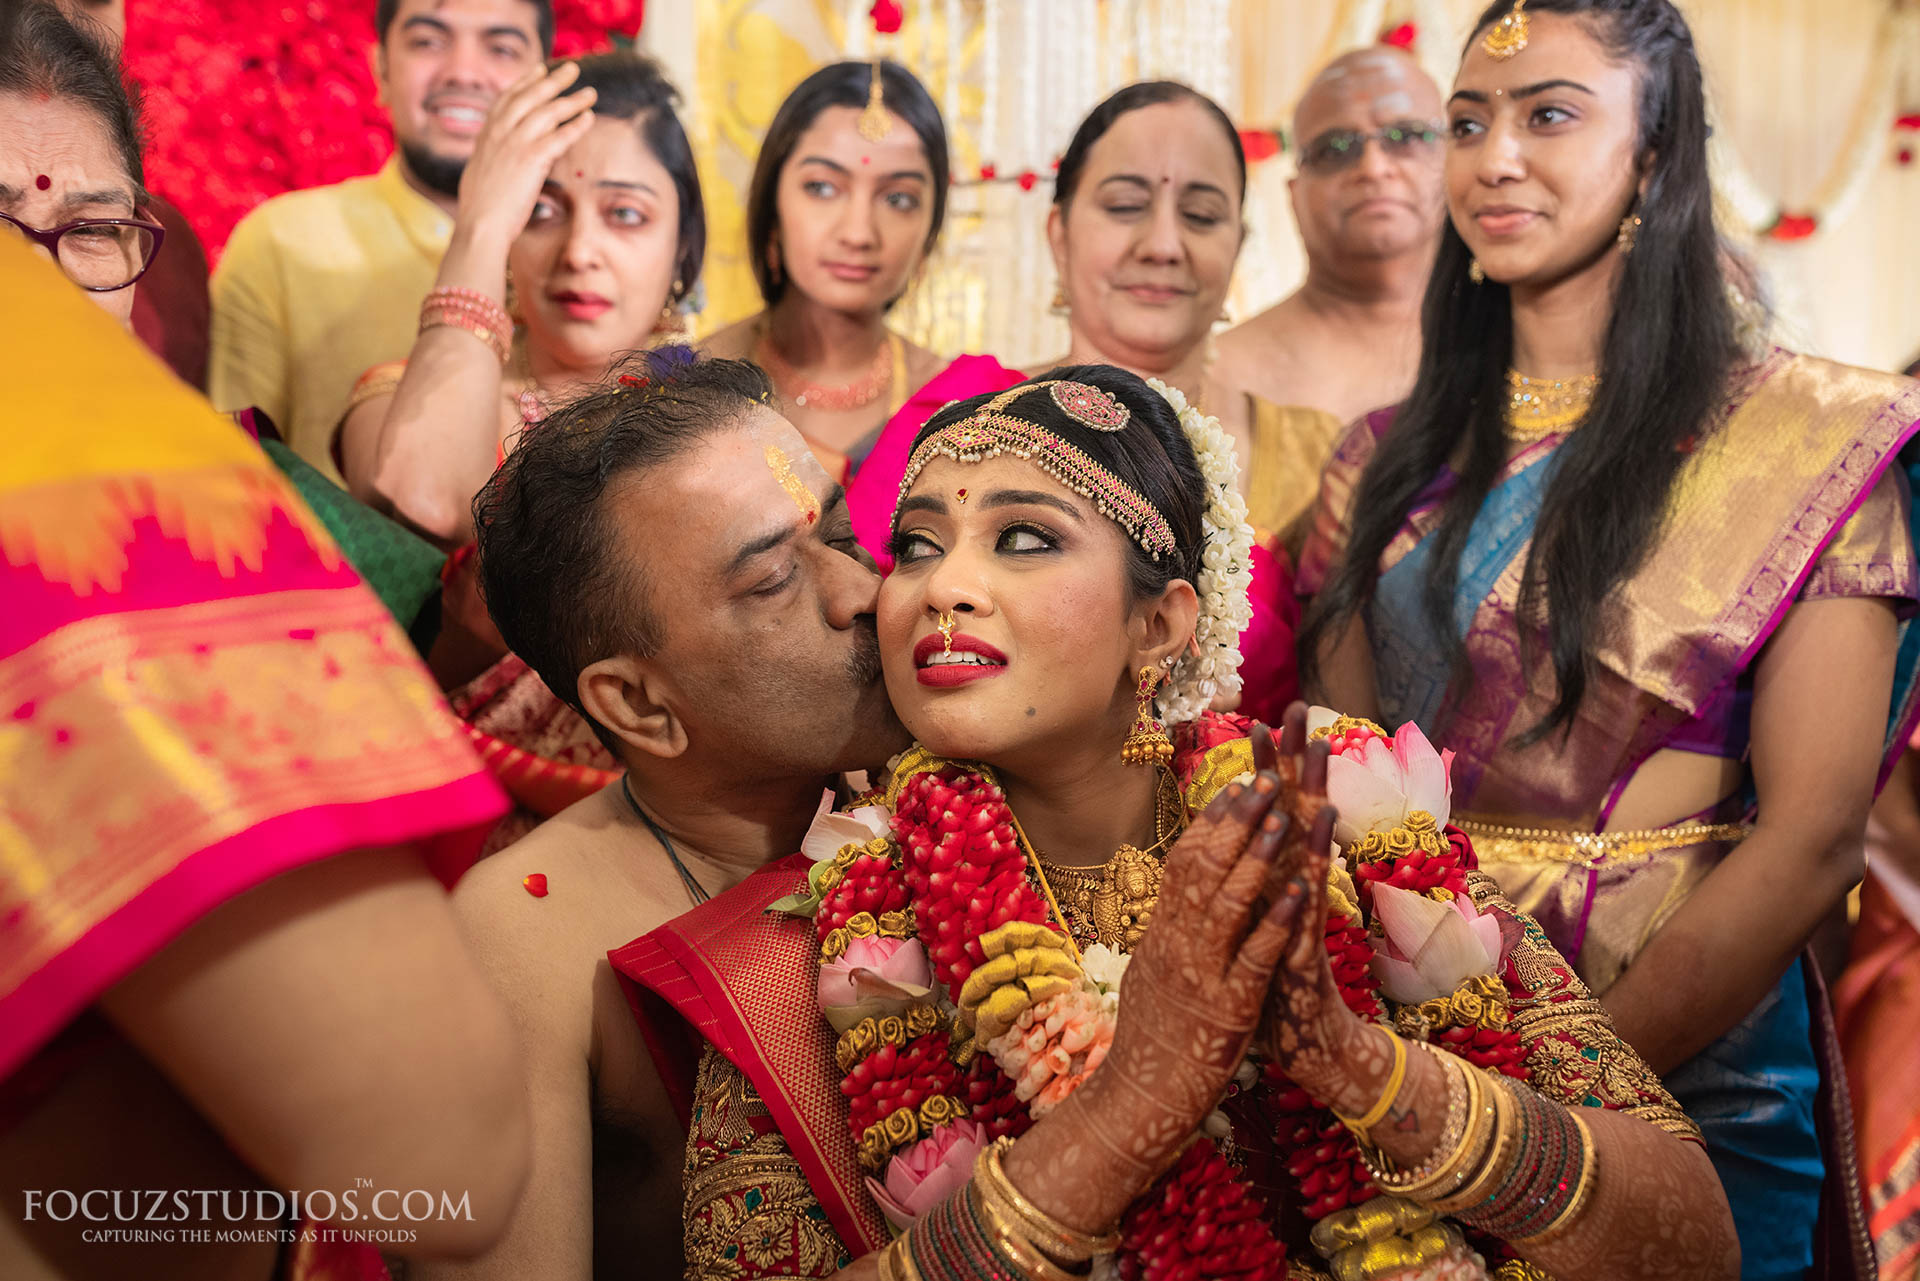 Focuz-studios-brahmin-wedding-photography-40